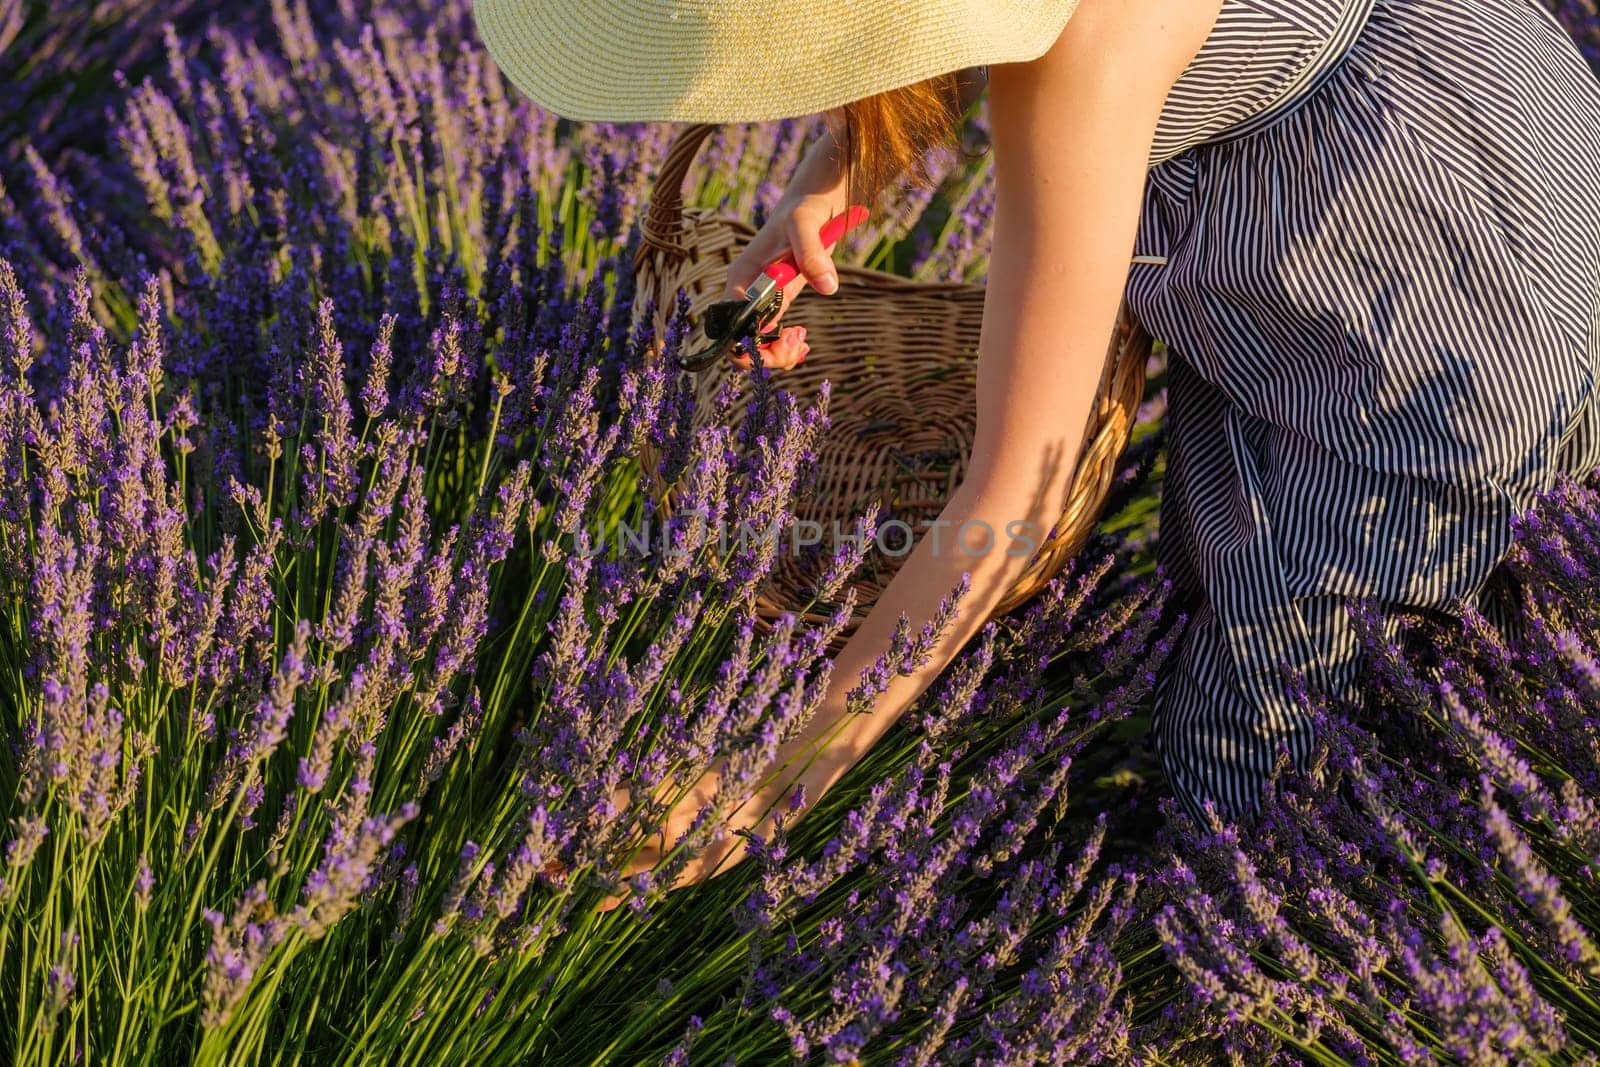 Woman plucks violet flowers putting into wicker basket by vladimka